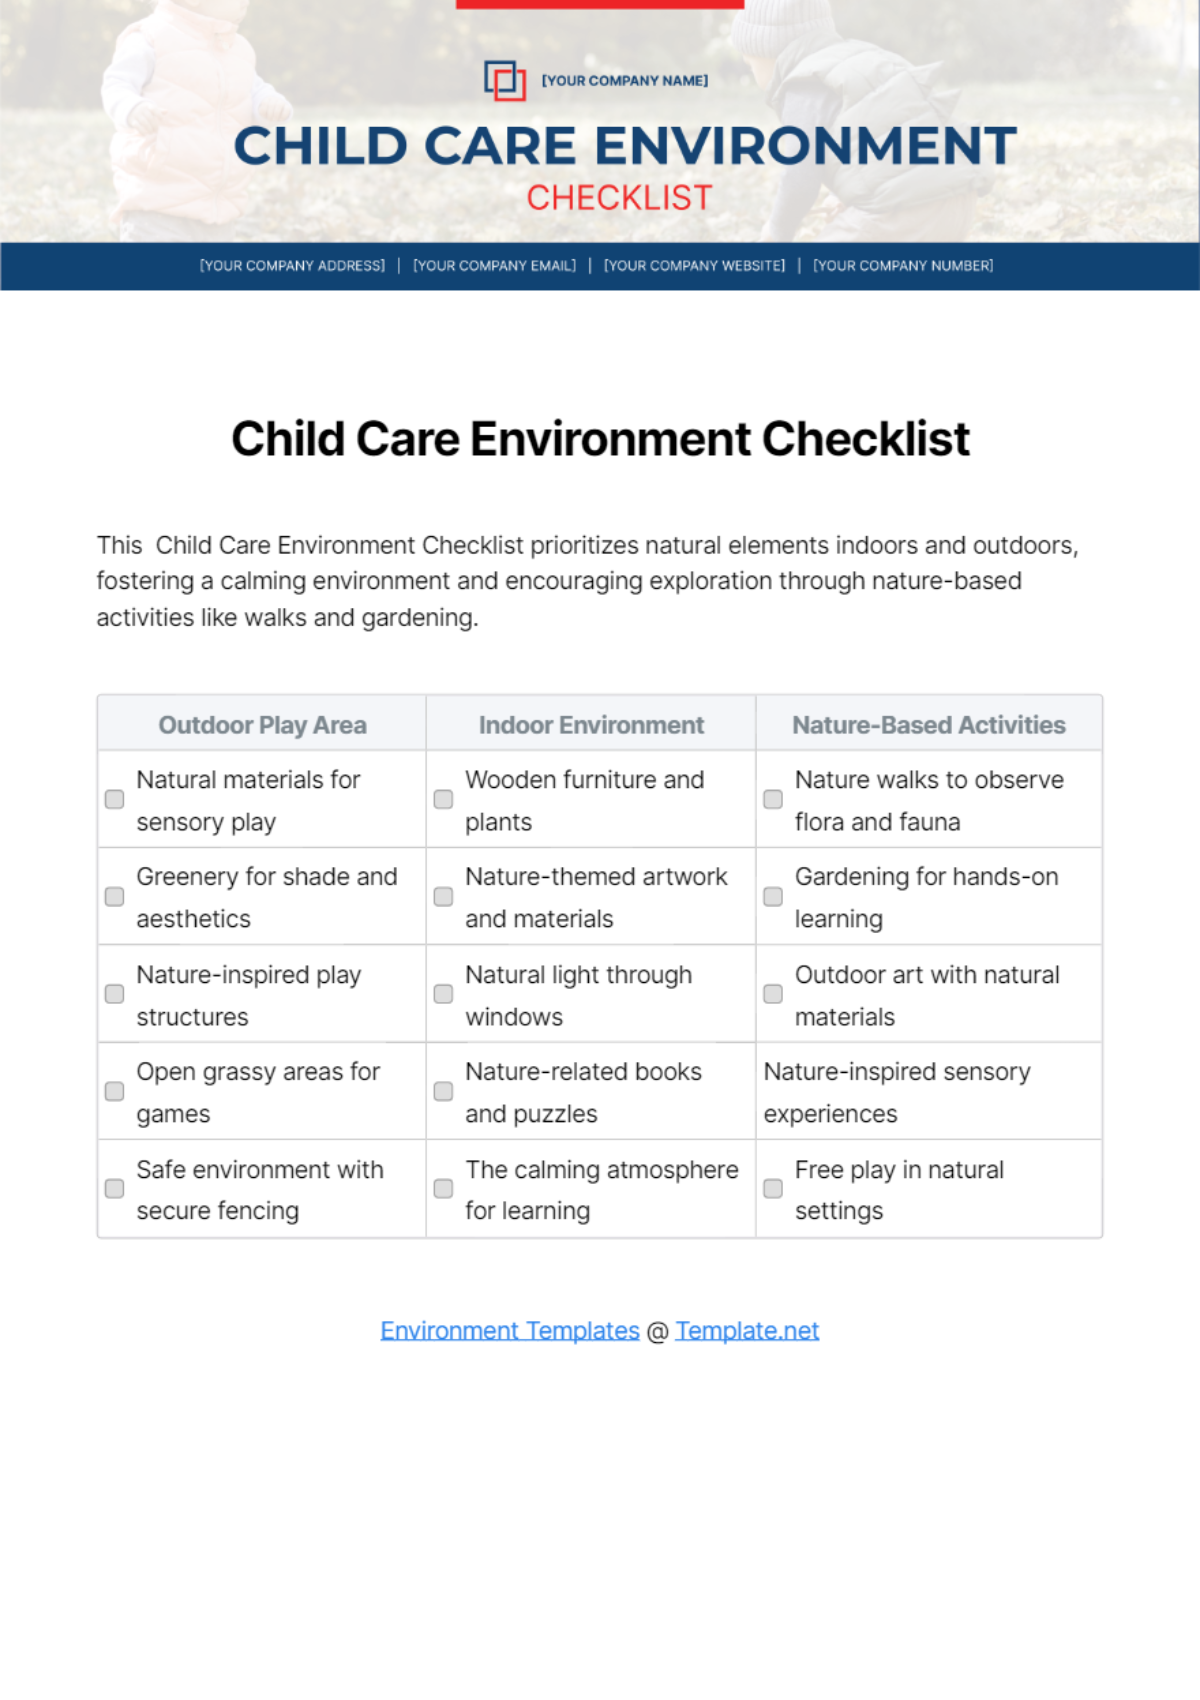 Child Care Environment Checklist Template